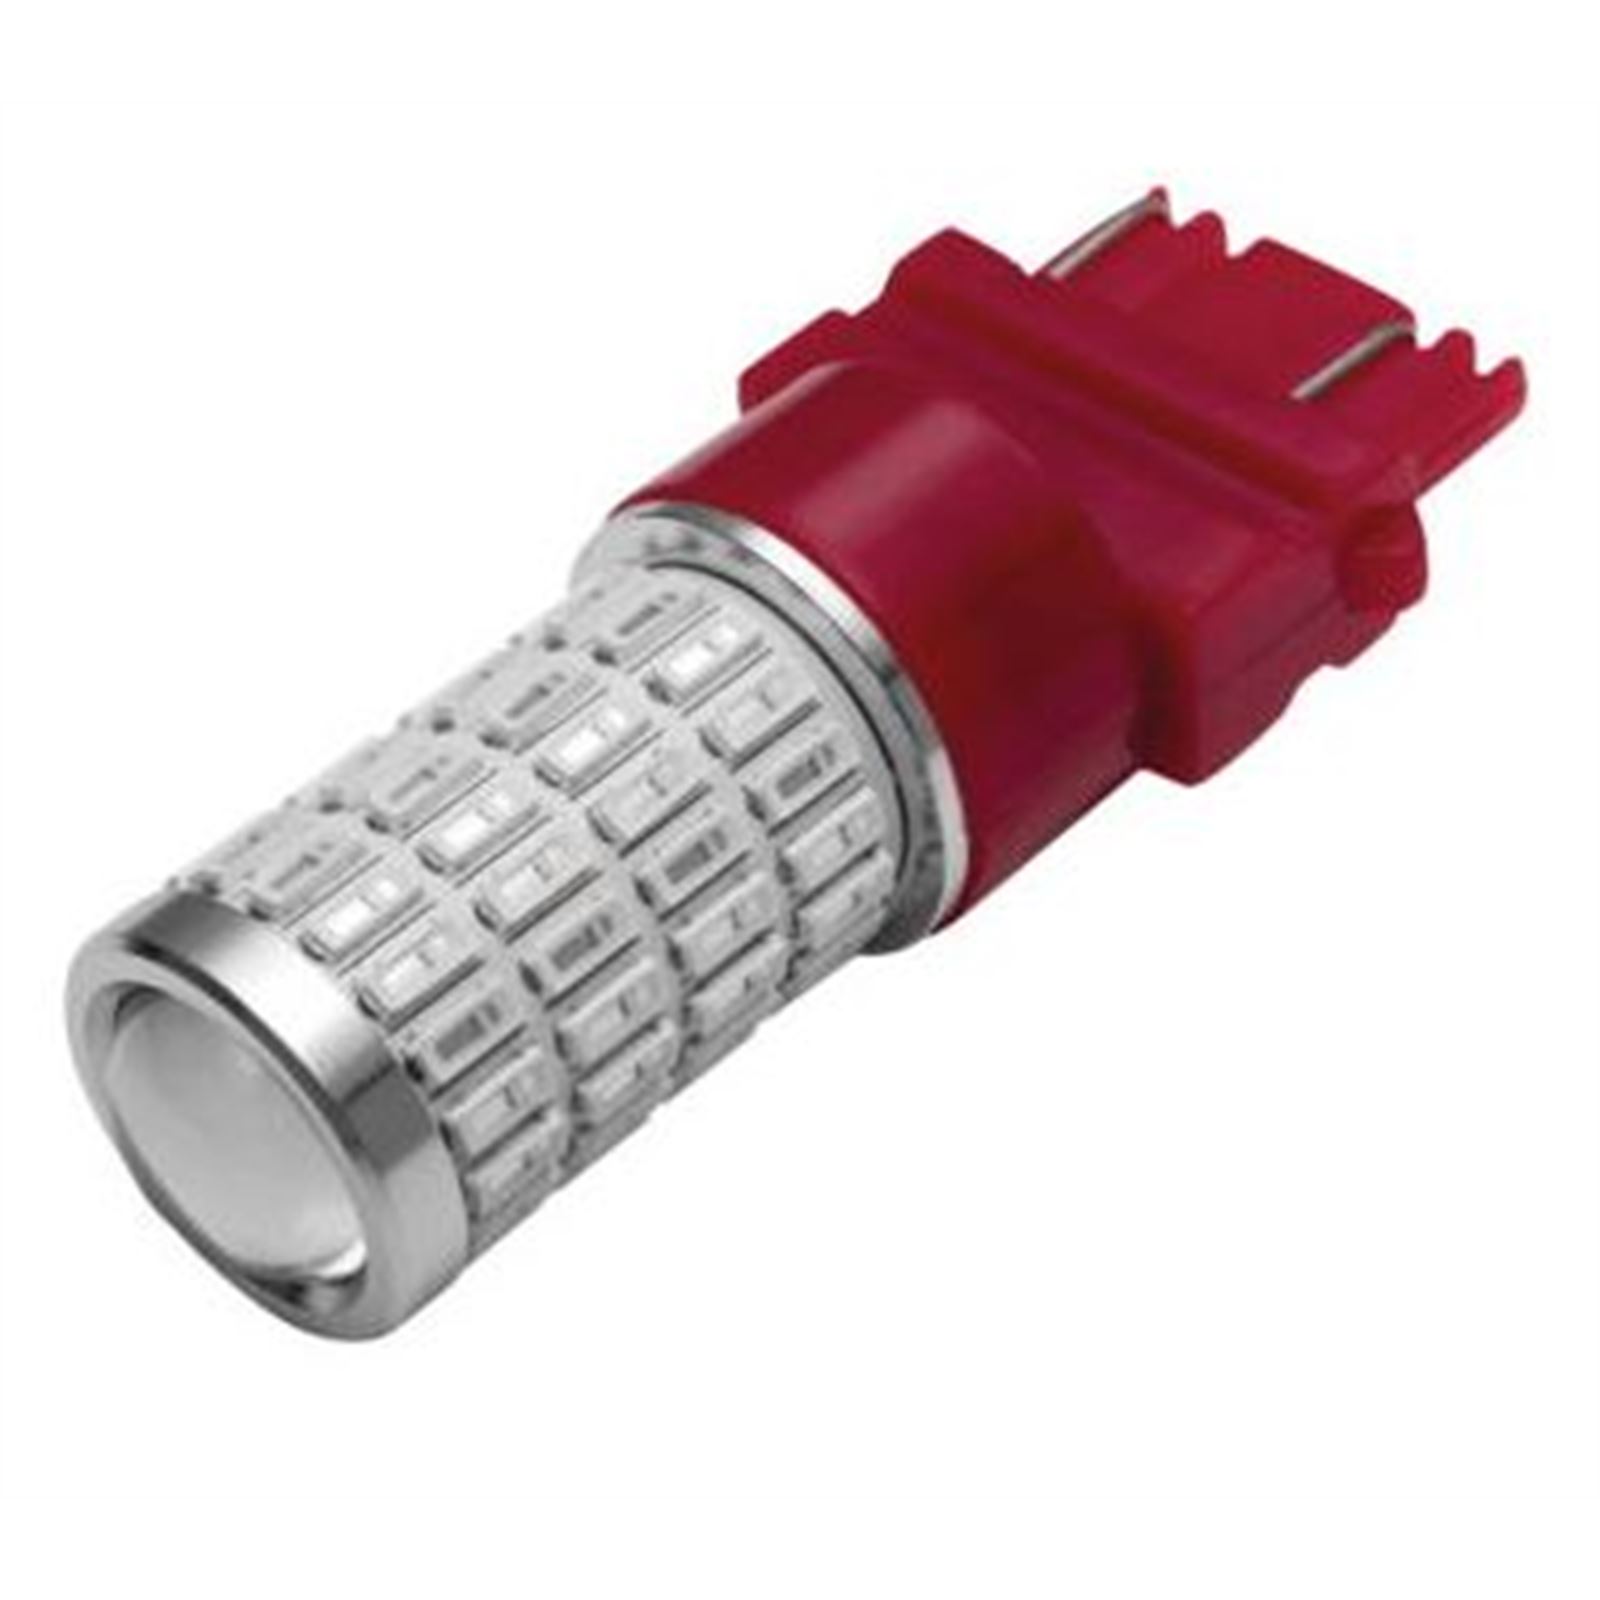 Kuryakyn High-Intensity LED Bulbs 3157, Red/Red